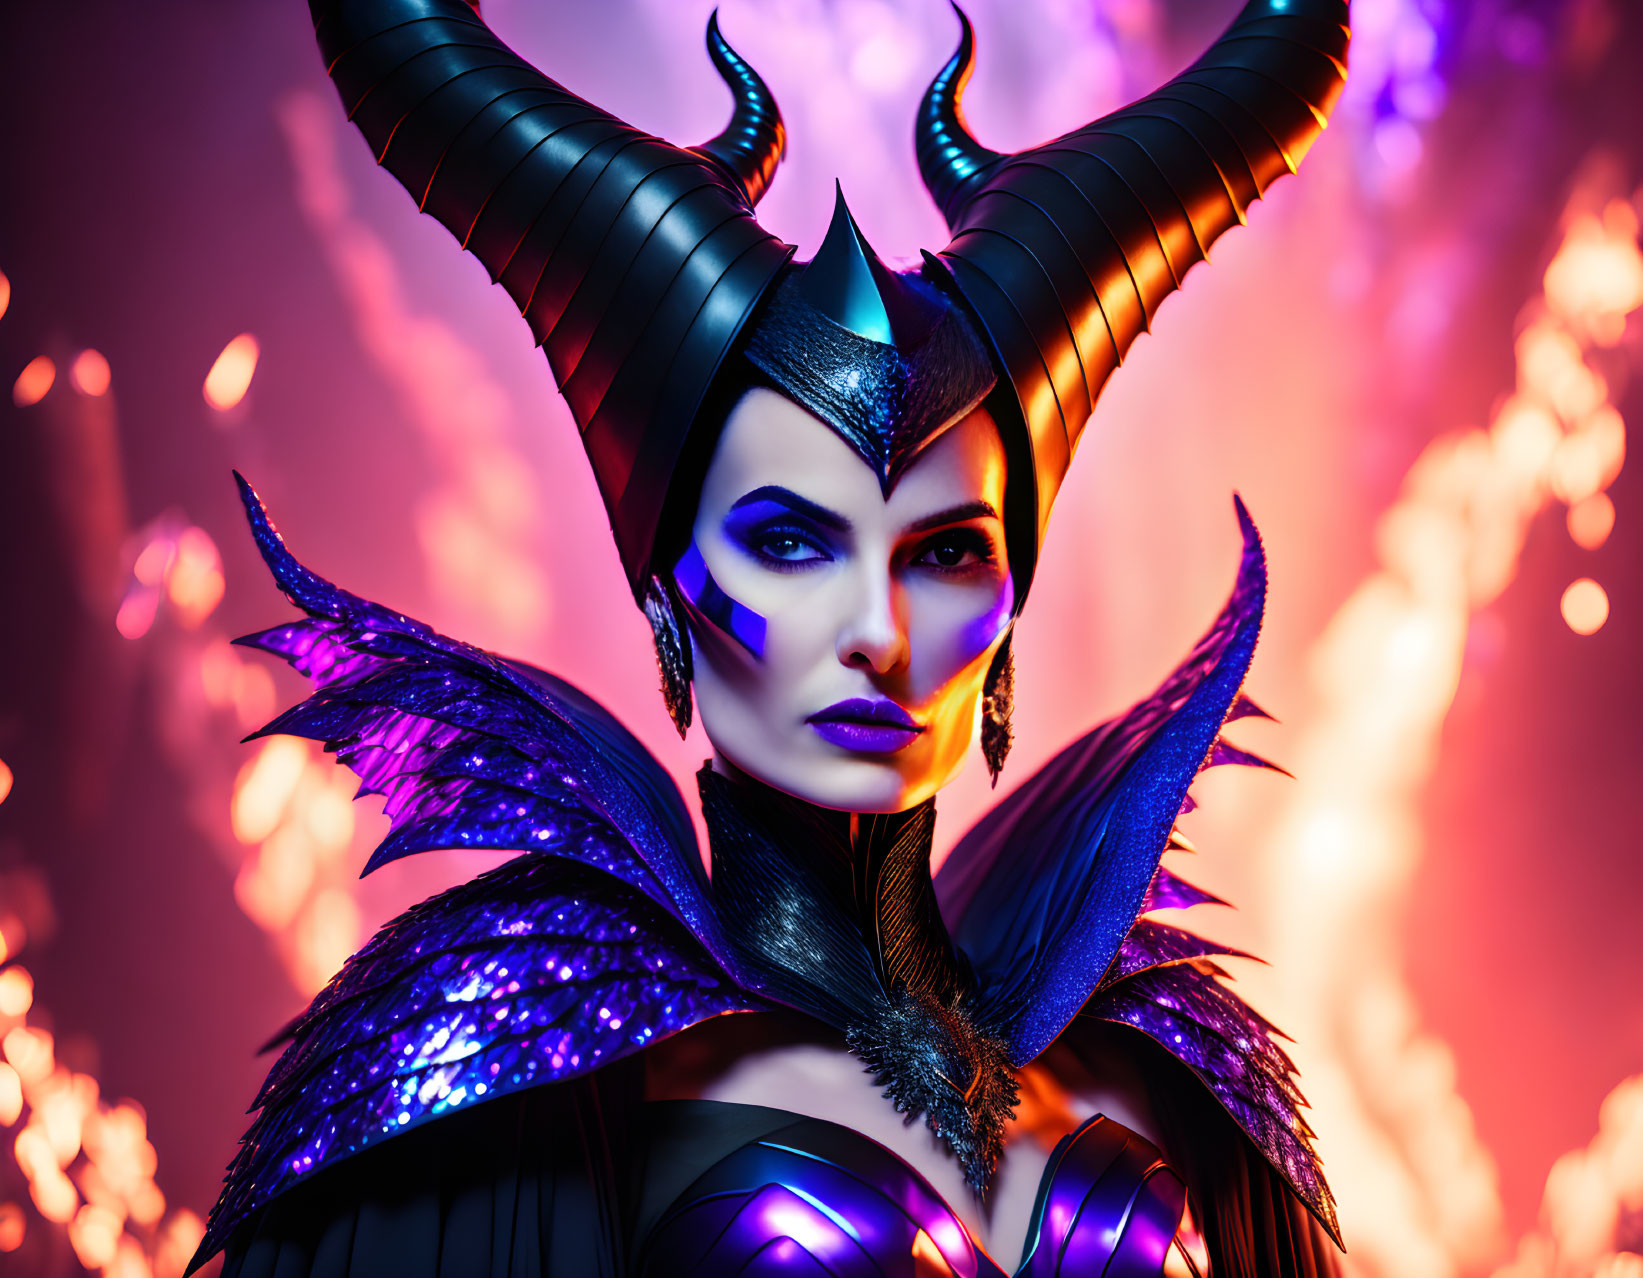 Maleficent, Queen of Darkness